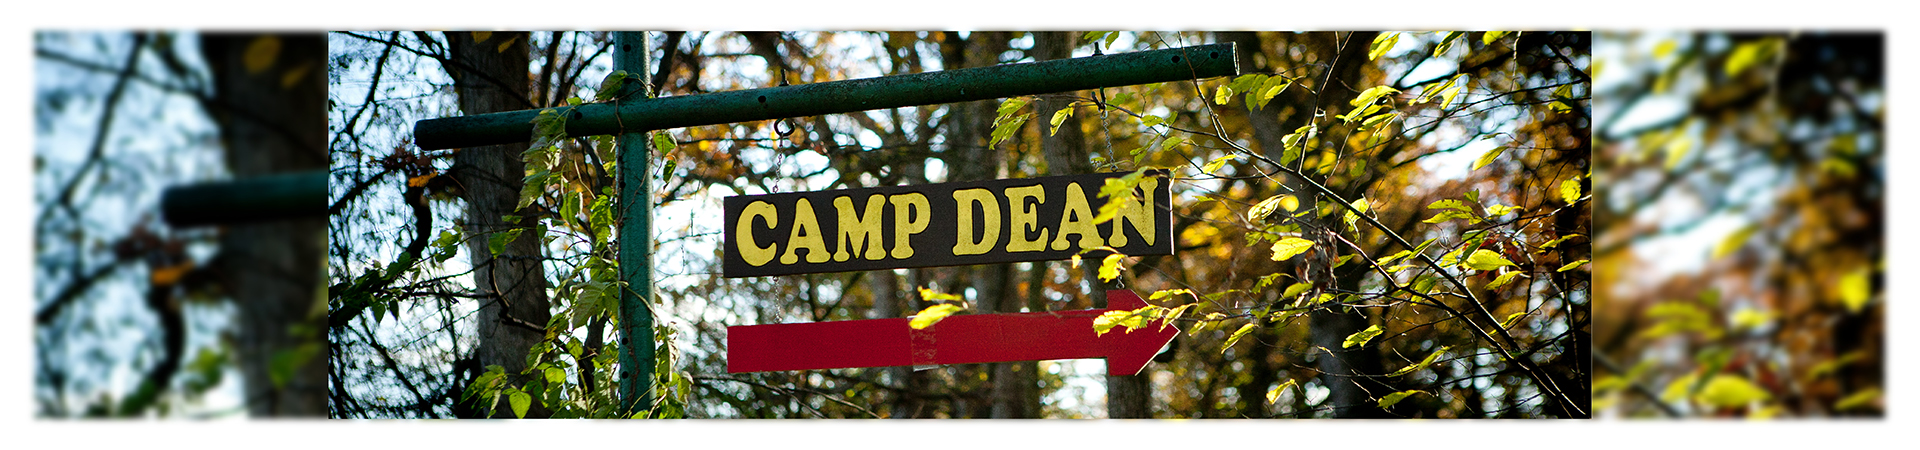  camp dean sign 